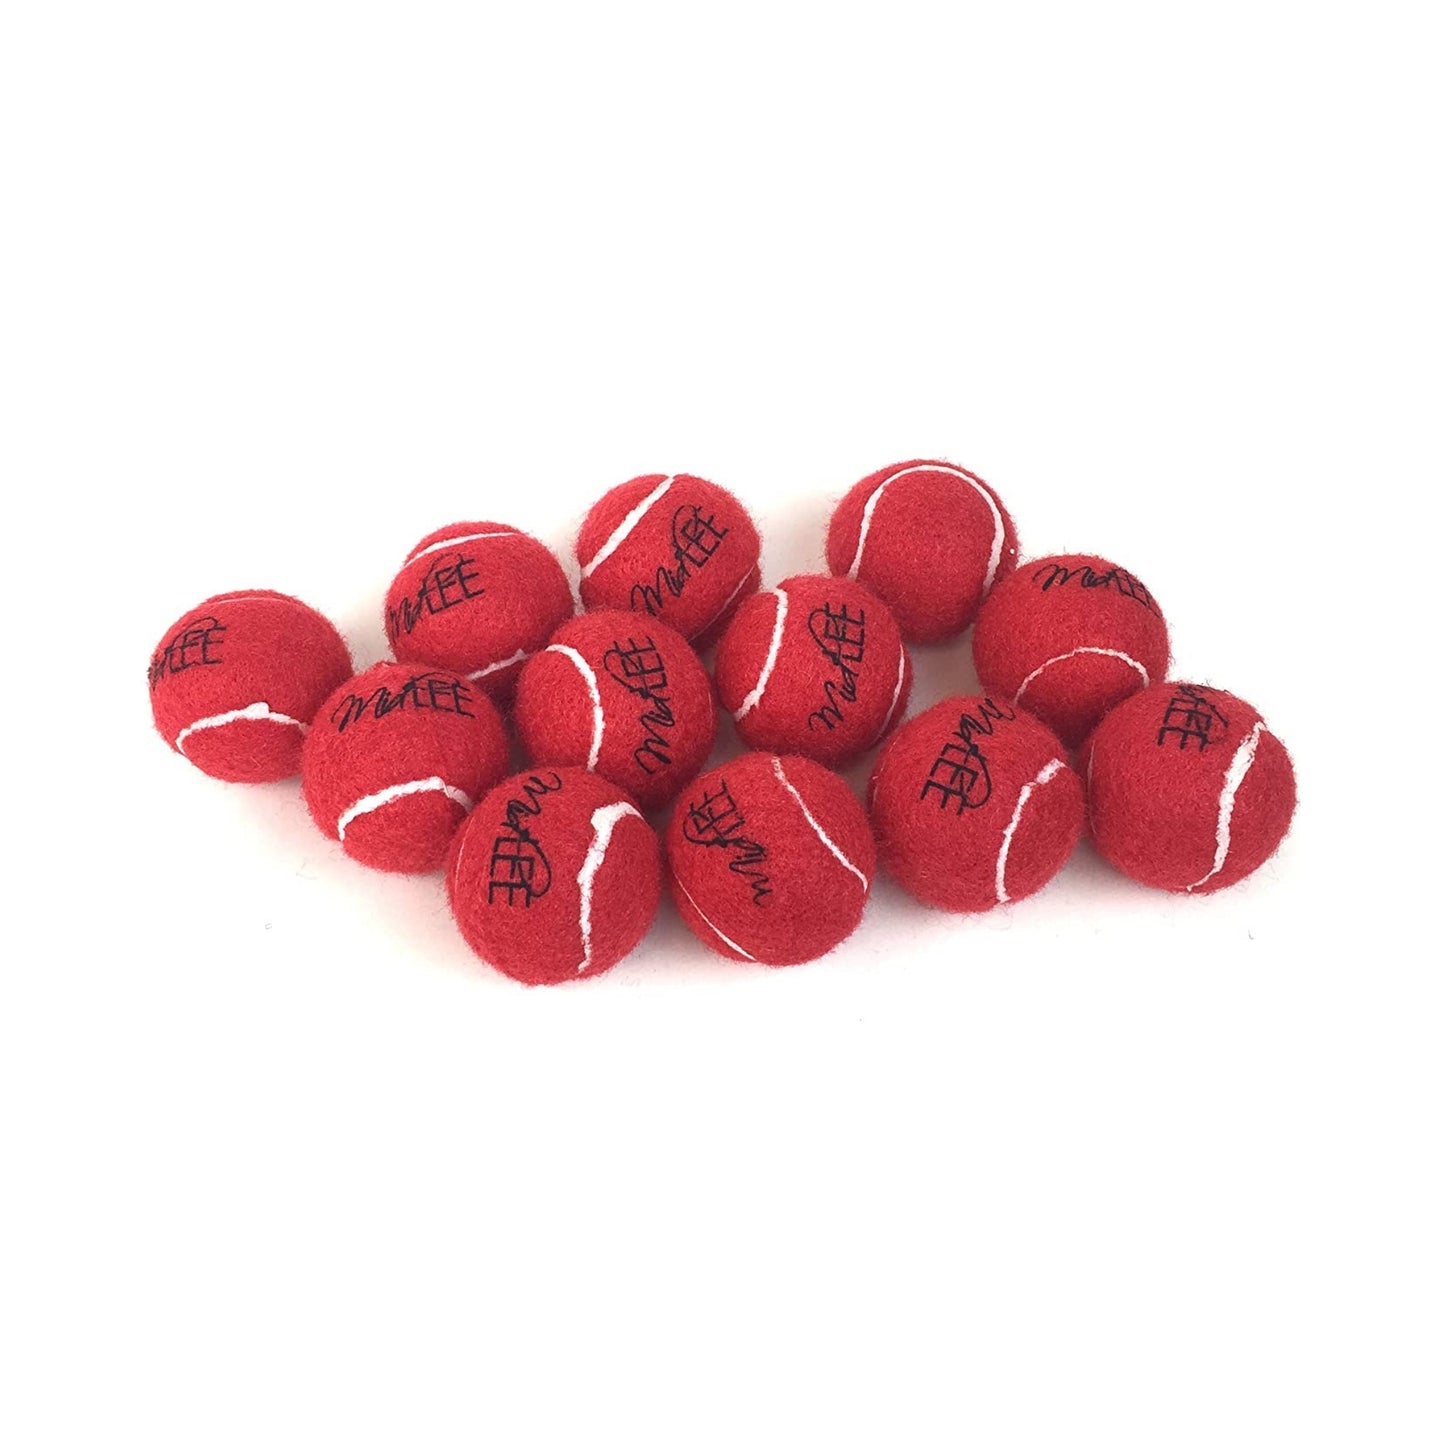 Midlee MINI Dog Tennis Balls, Red, 1.5" 12-Pack- Fetch Ball Laucher Pet Small Tennis Balls